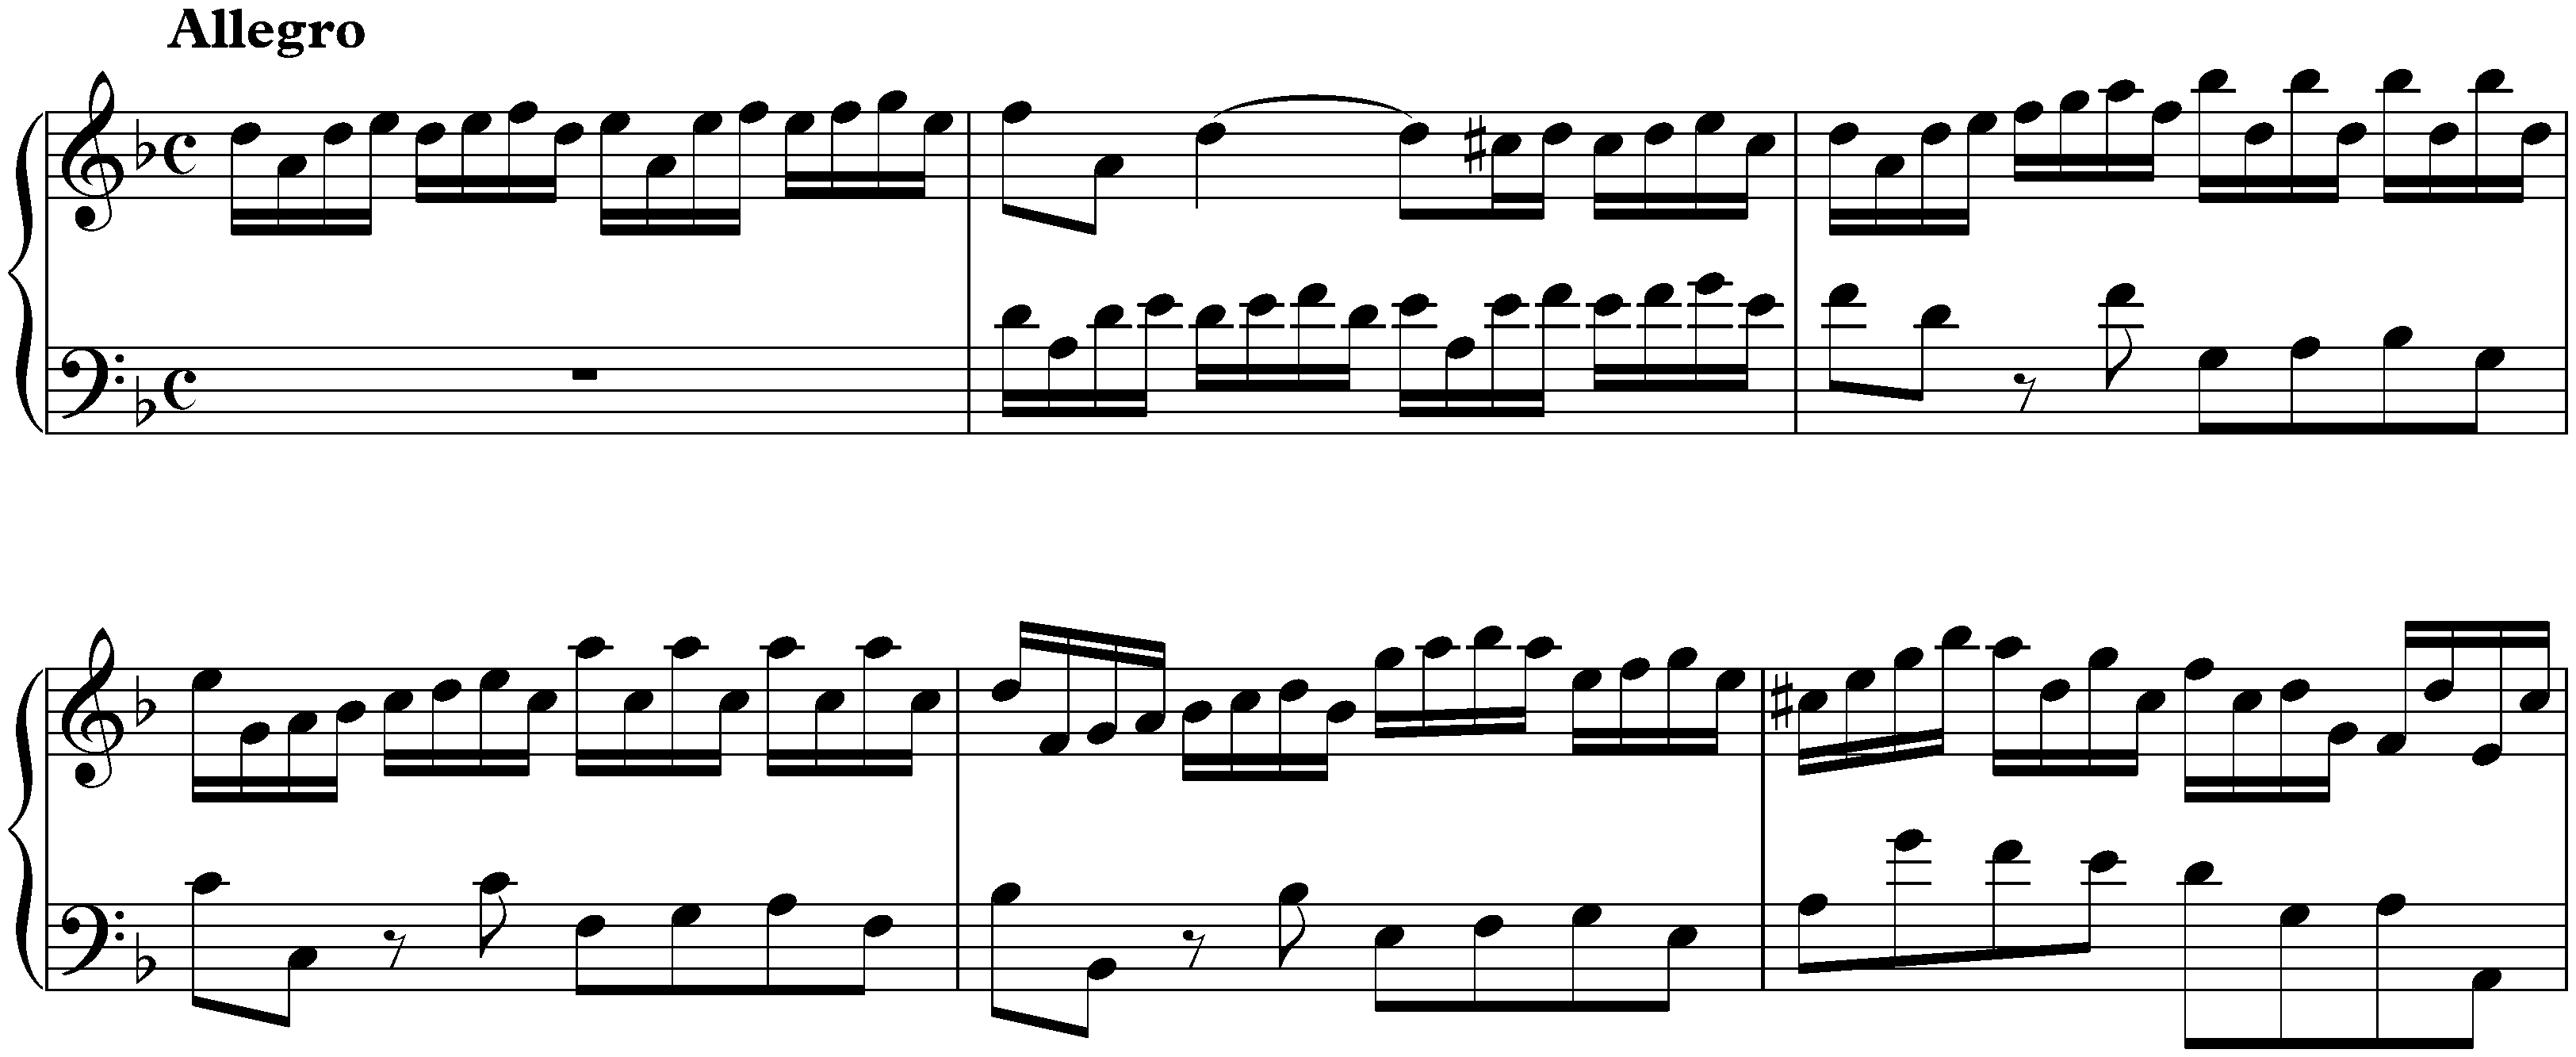 Allegro in D minor, HWV 475